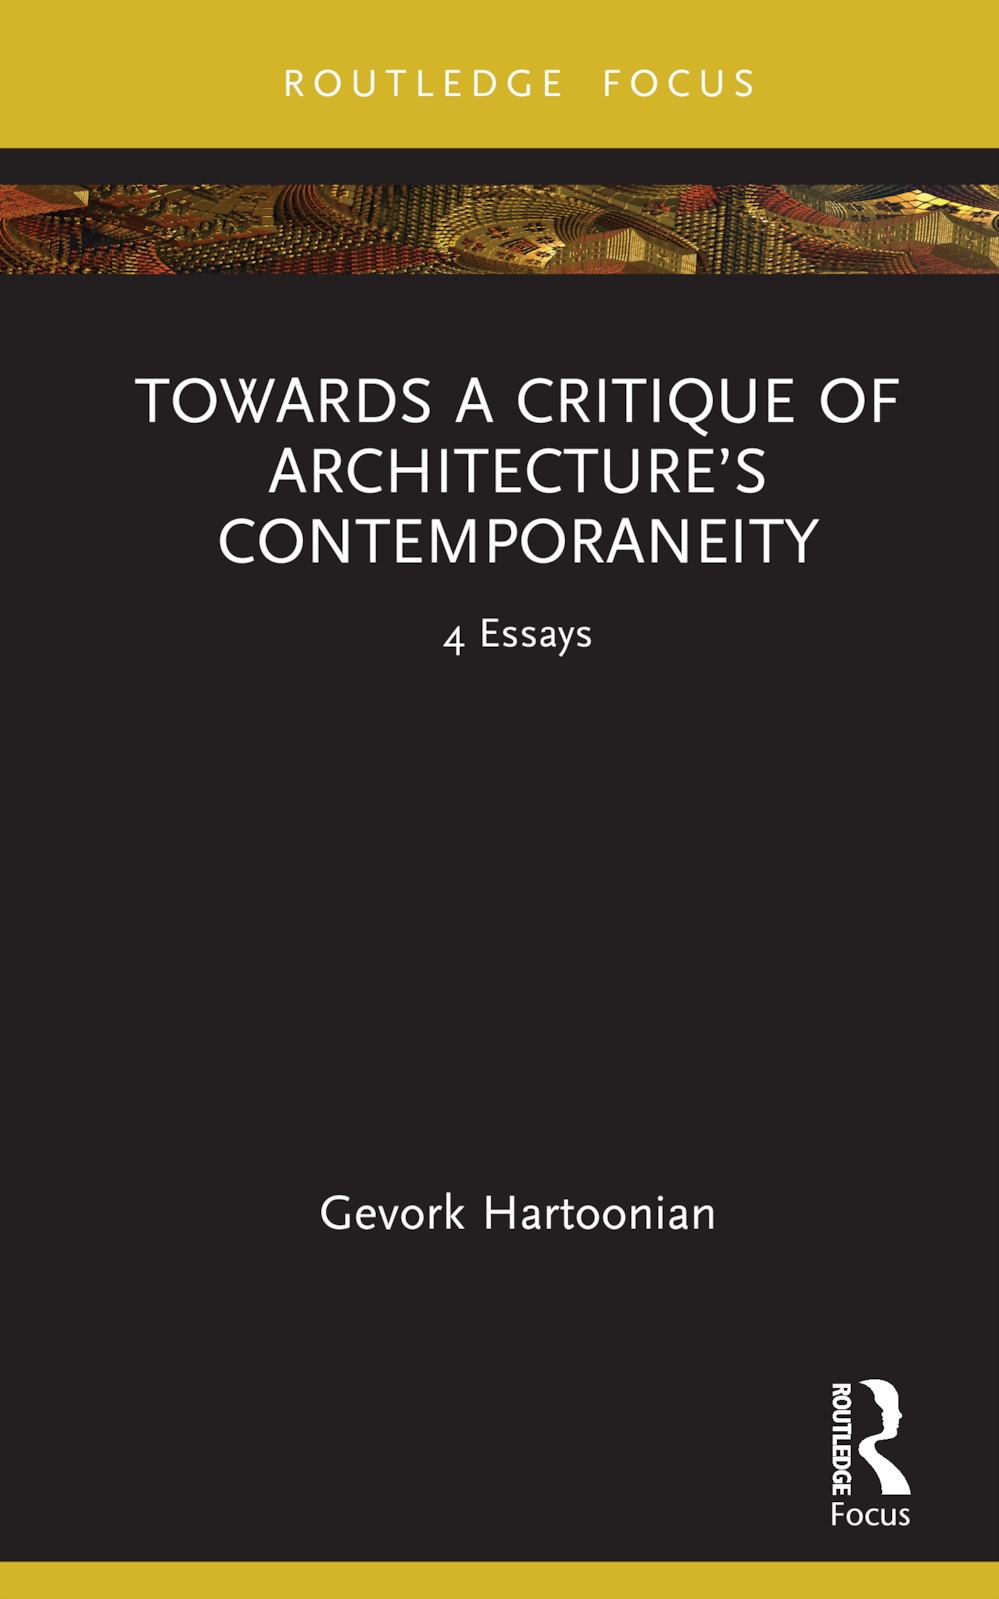 Towards a Critique of Architecture’s Contemporaneity: 4 Essays